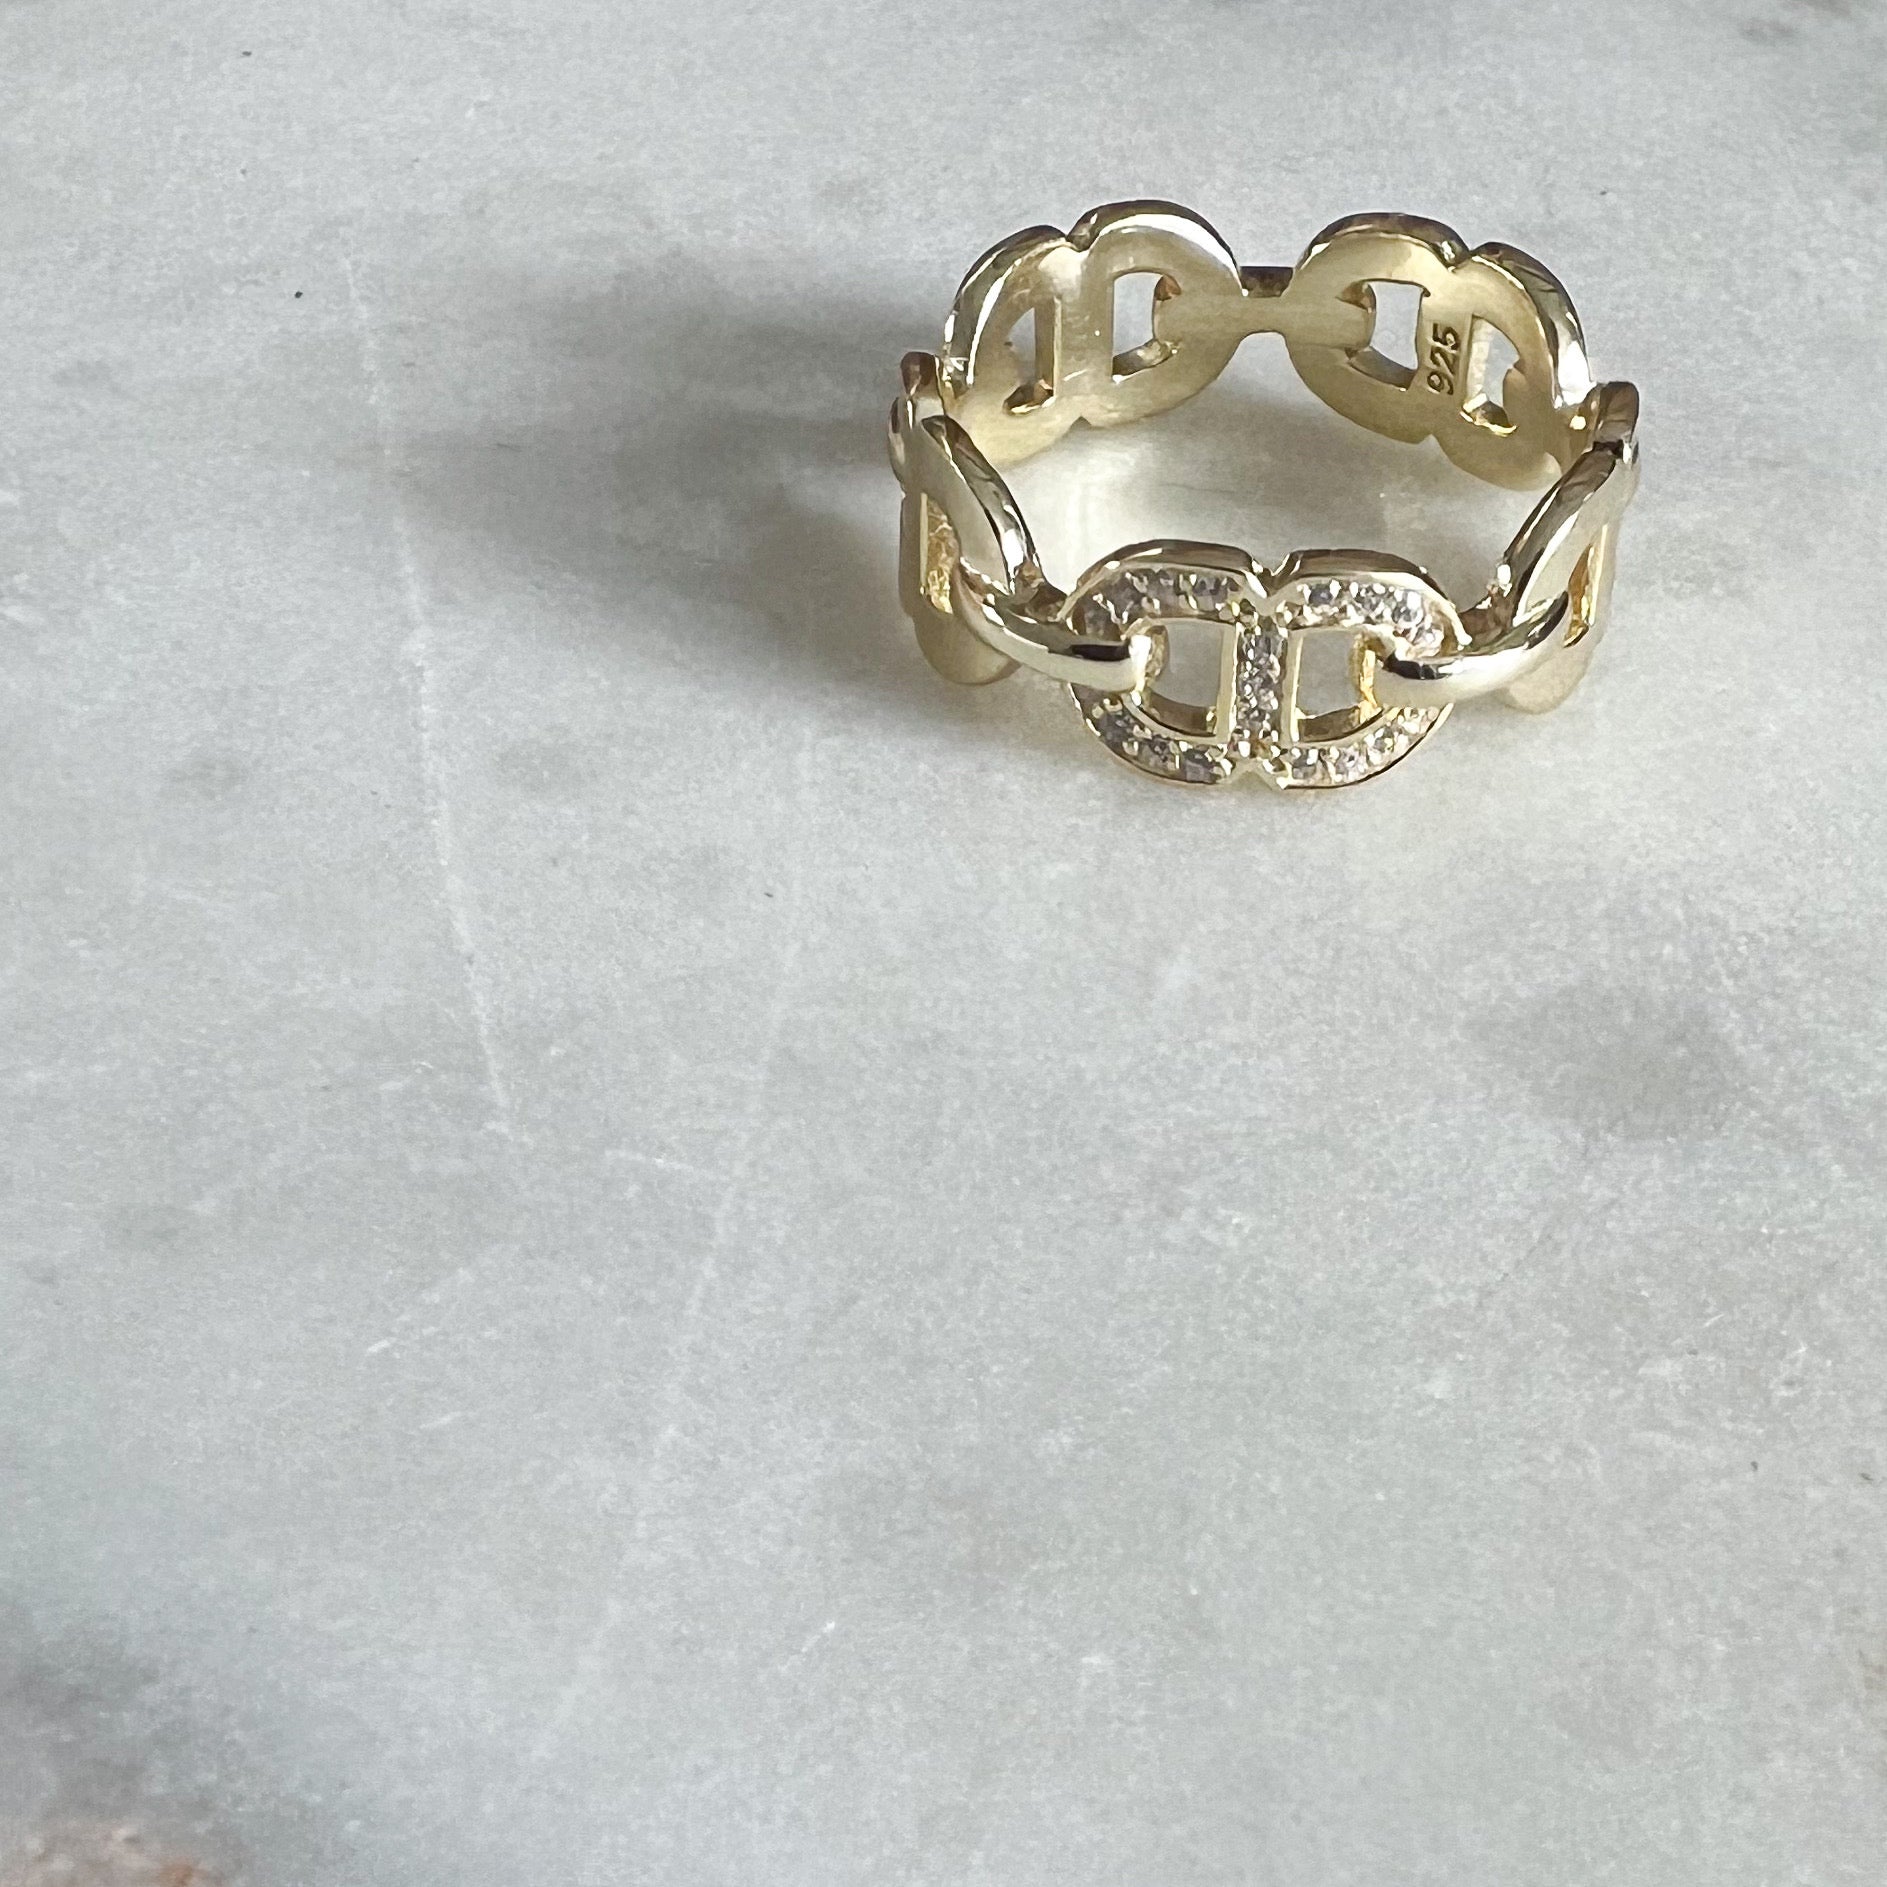 Locket Gold Sterling silver 925 Ring Size 7 - BelleStyle